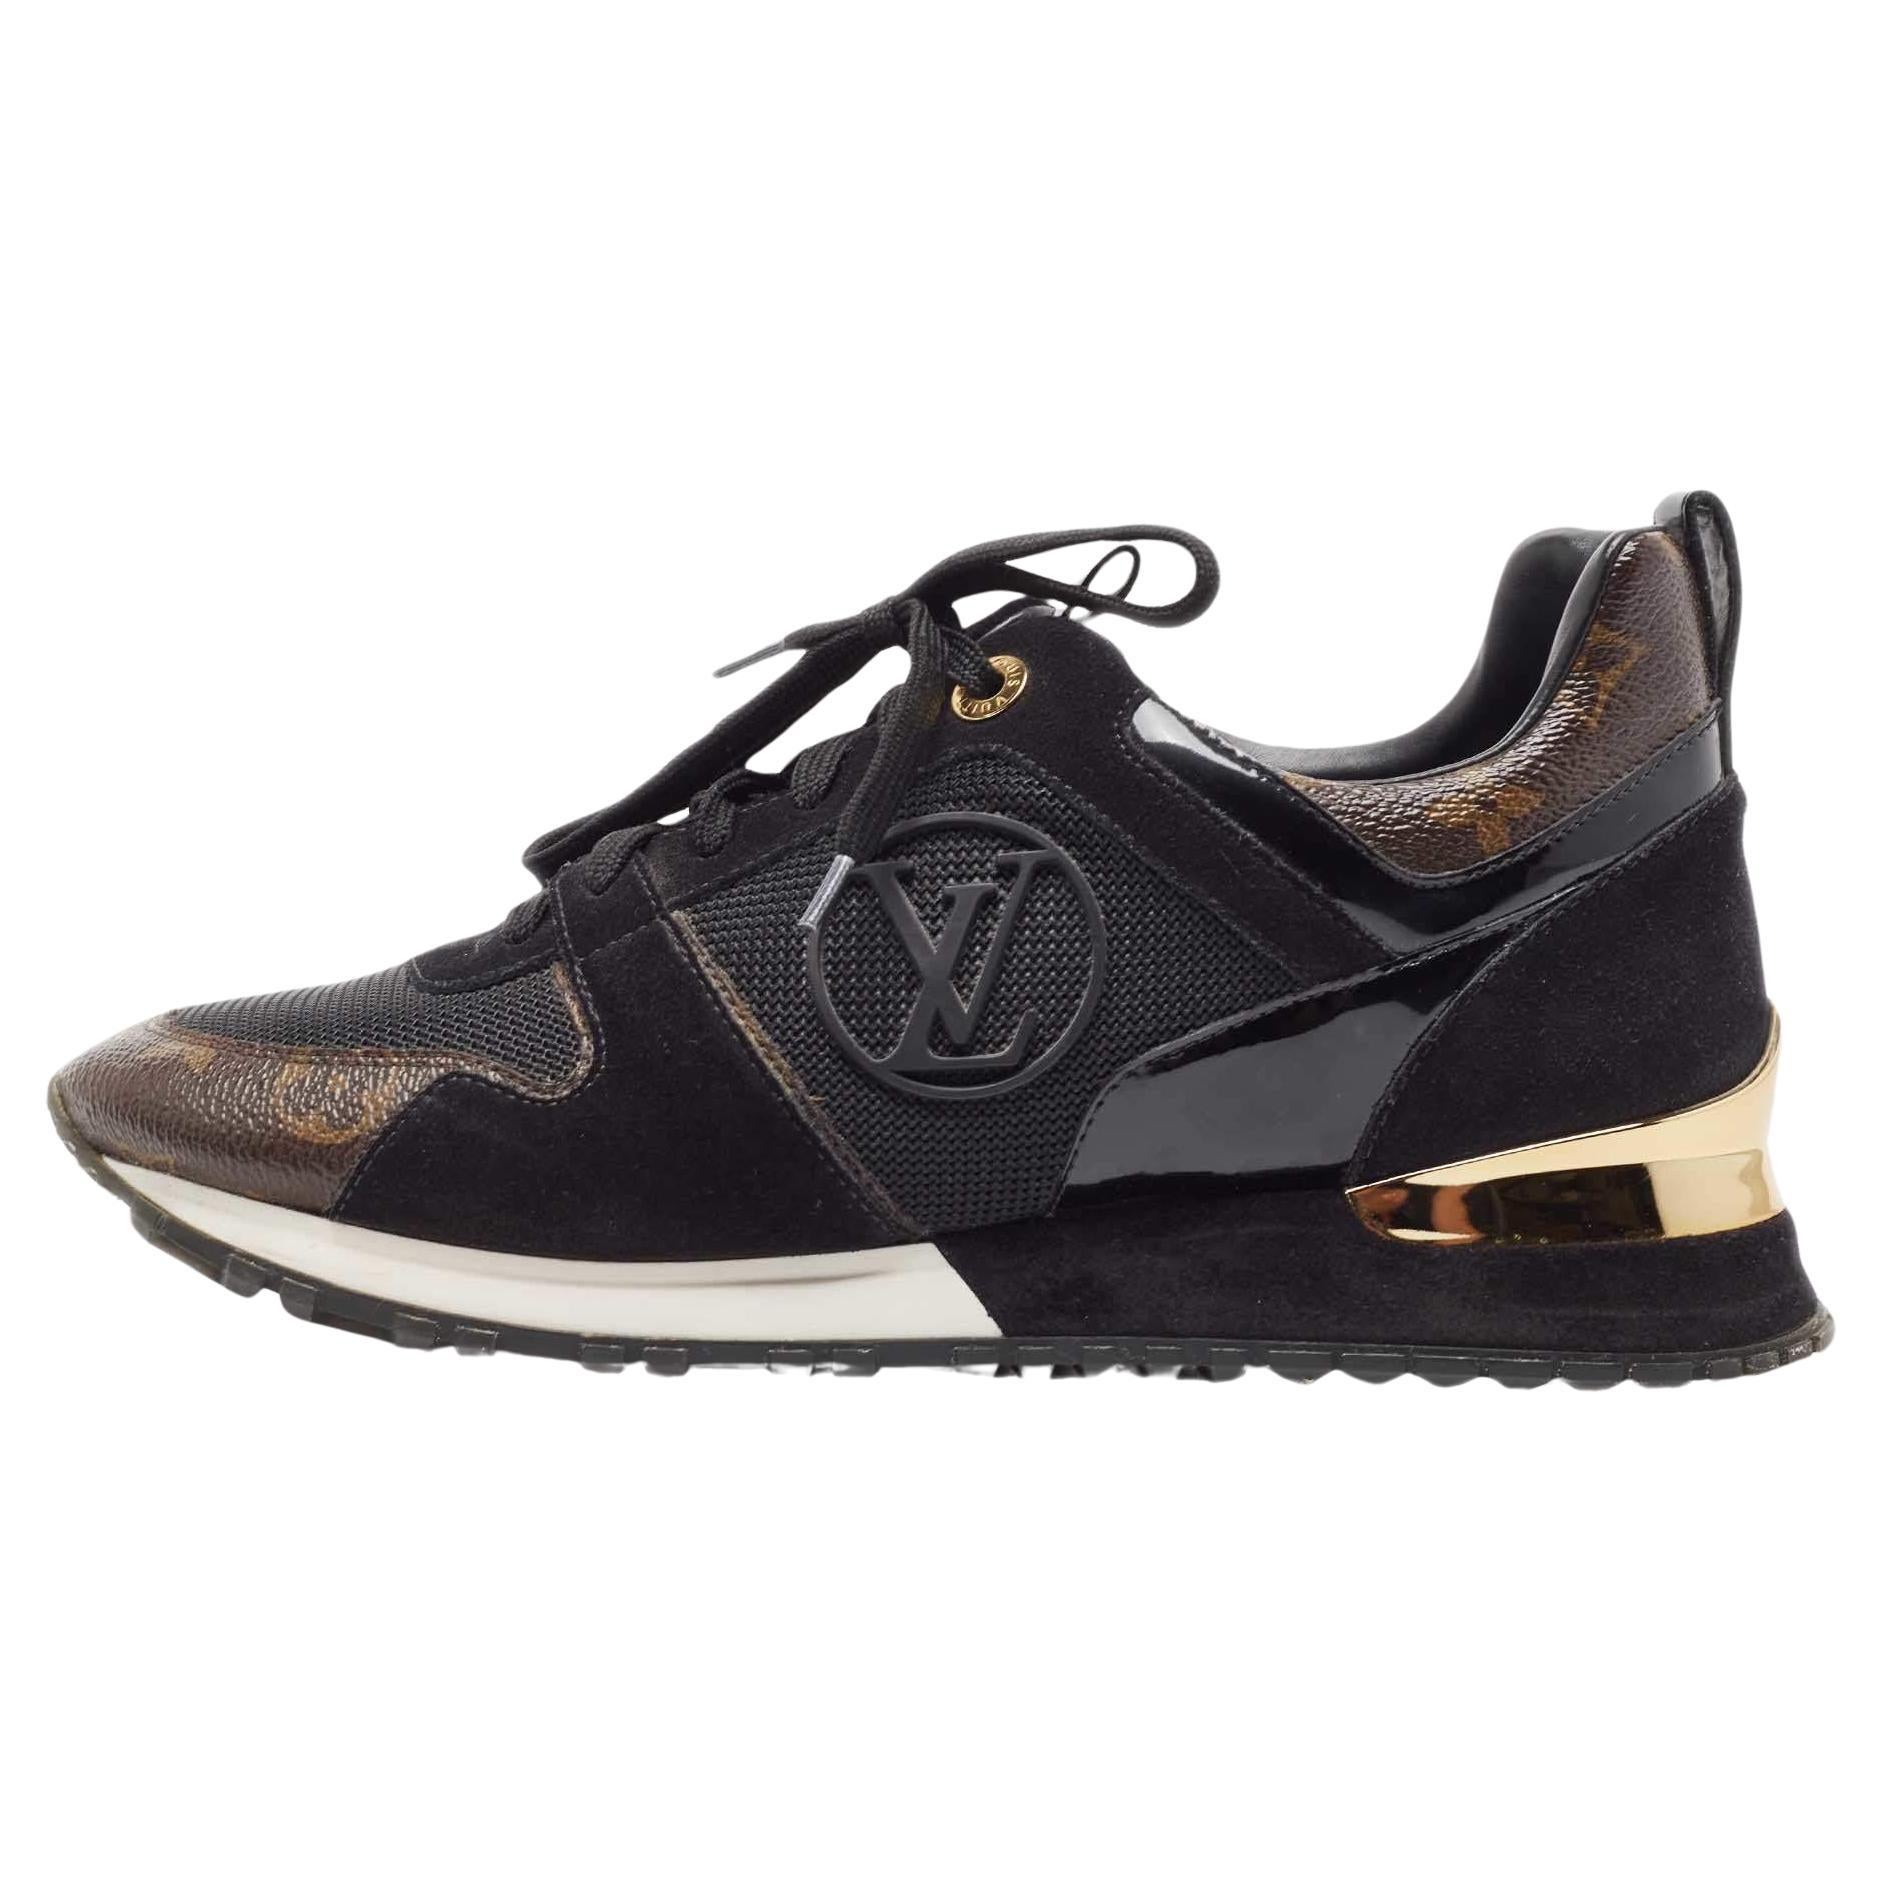 Louis Vuitton Black Nylon, Leather Archlight Sneakers Size 38